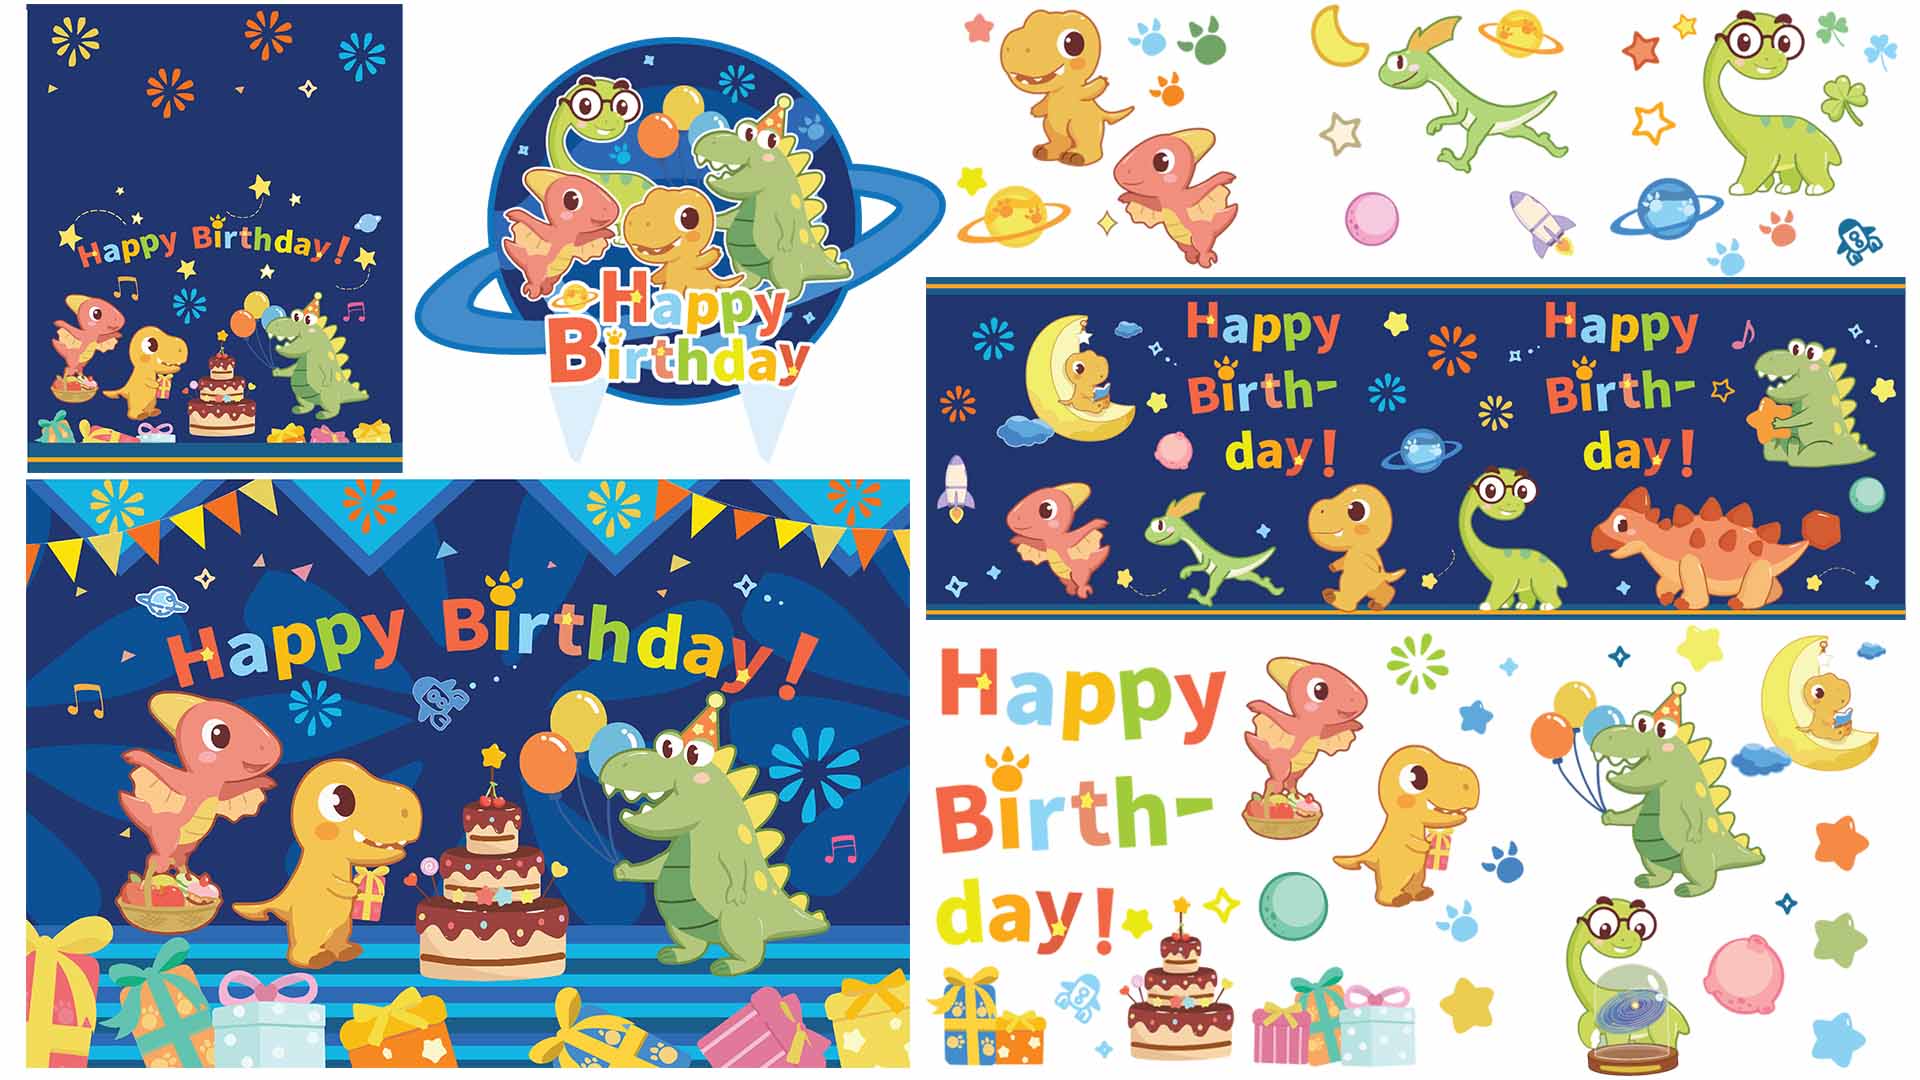 The Moyu Animation Company墨羽动画旗下动画片三只小恐龙Three Little Dinosaurs剧照 The Moyu Animation Company Three Little Dinosaurs sticker design- Halloween theme2